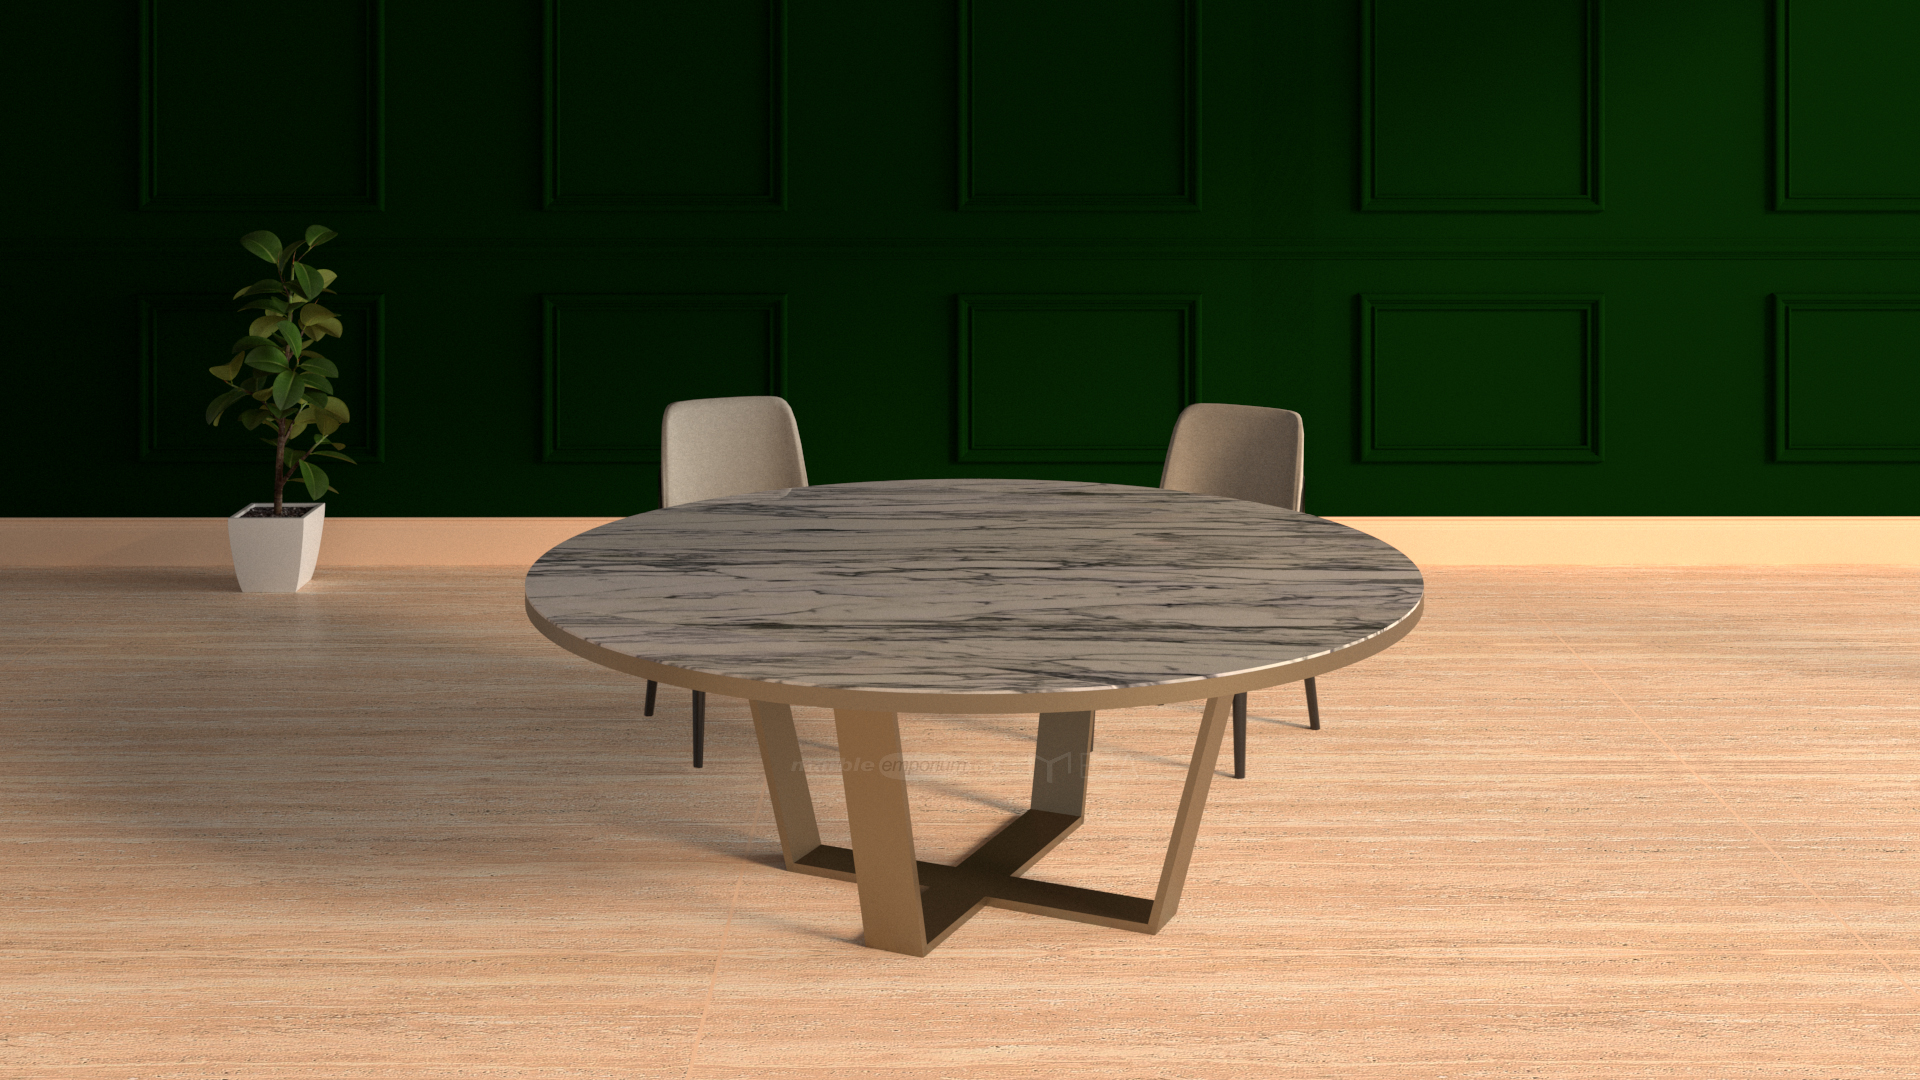 Meja dining table